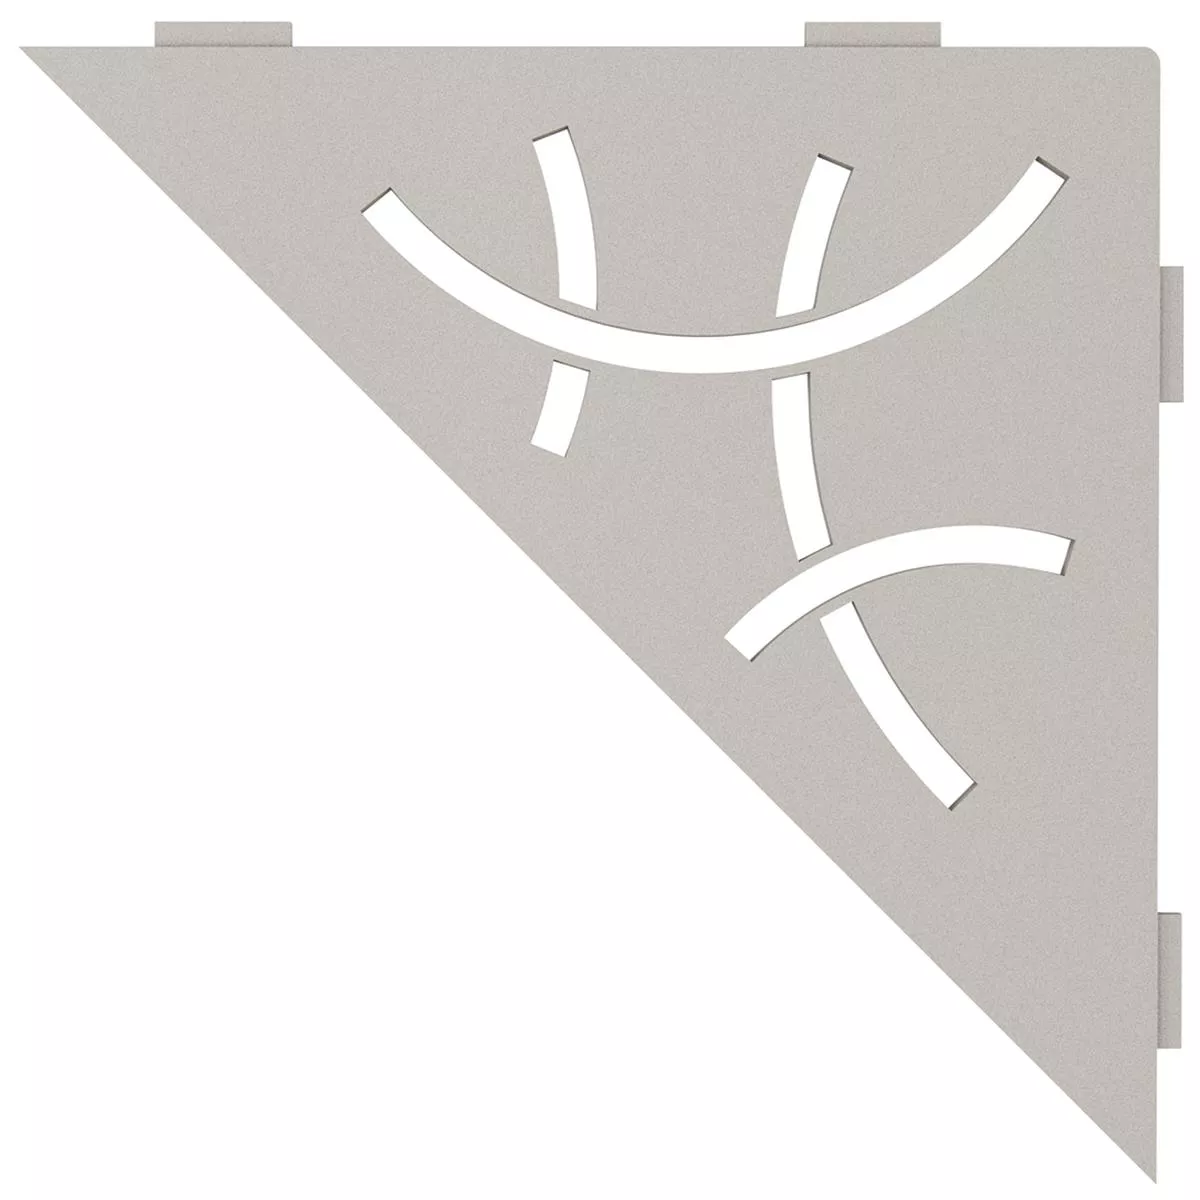 Schlüter væghylde trekant 21x21cm kurve beige grå